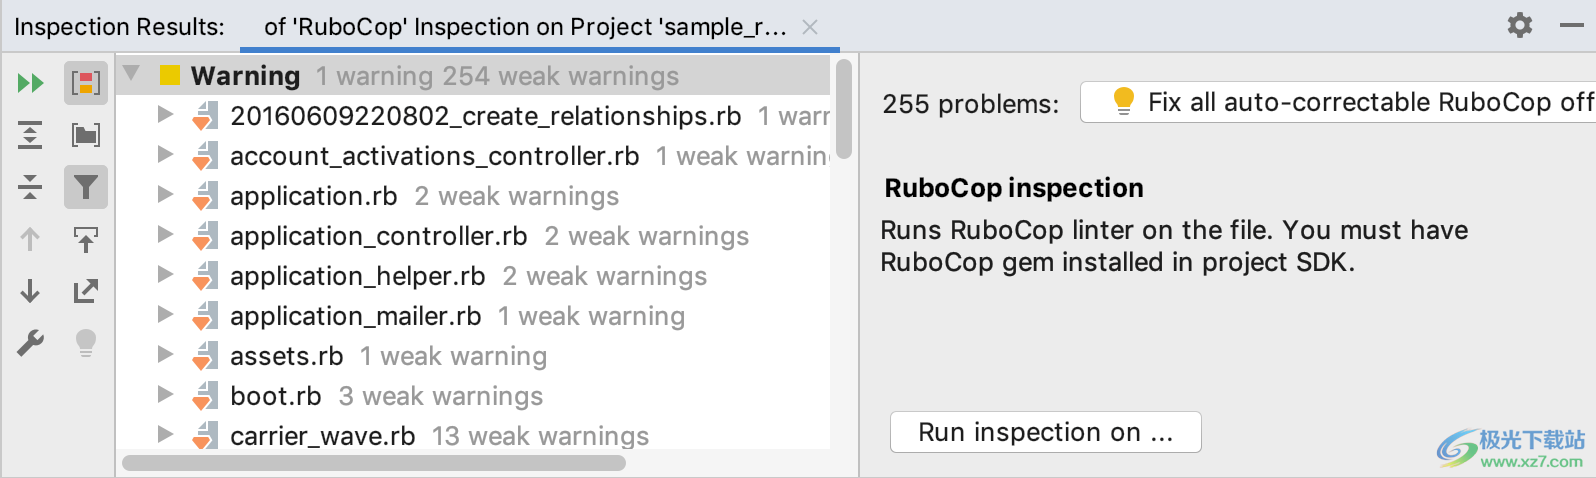  RubyMine2023 cracked version